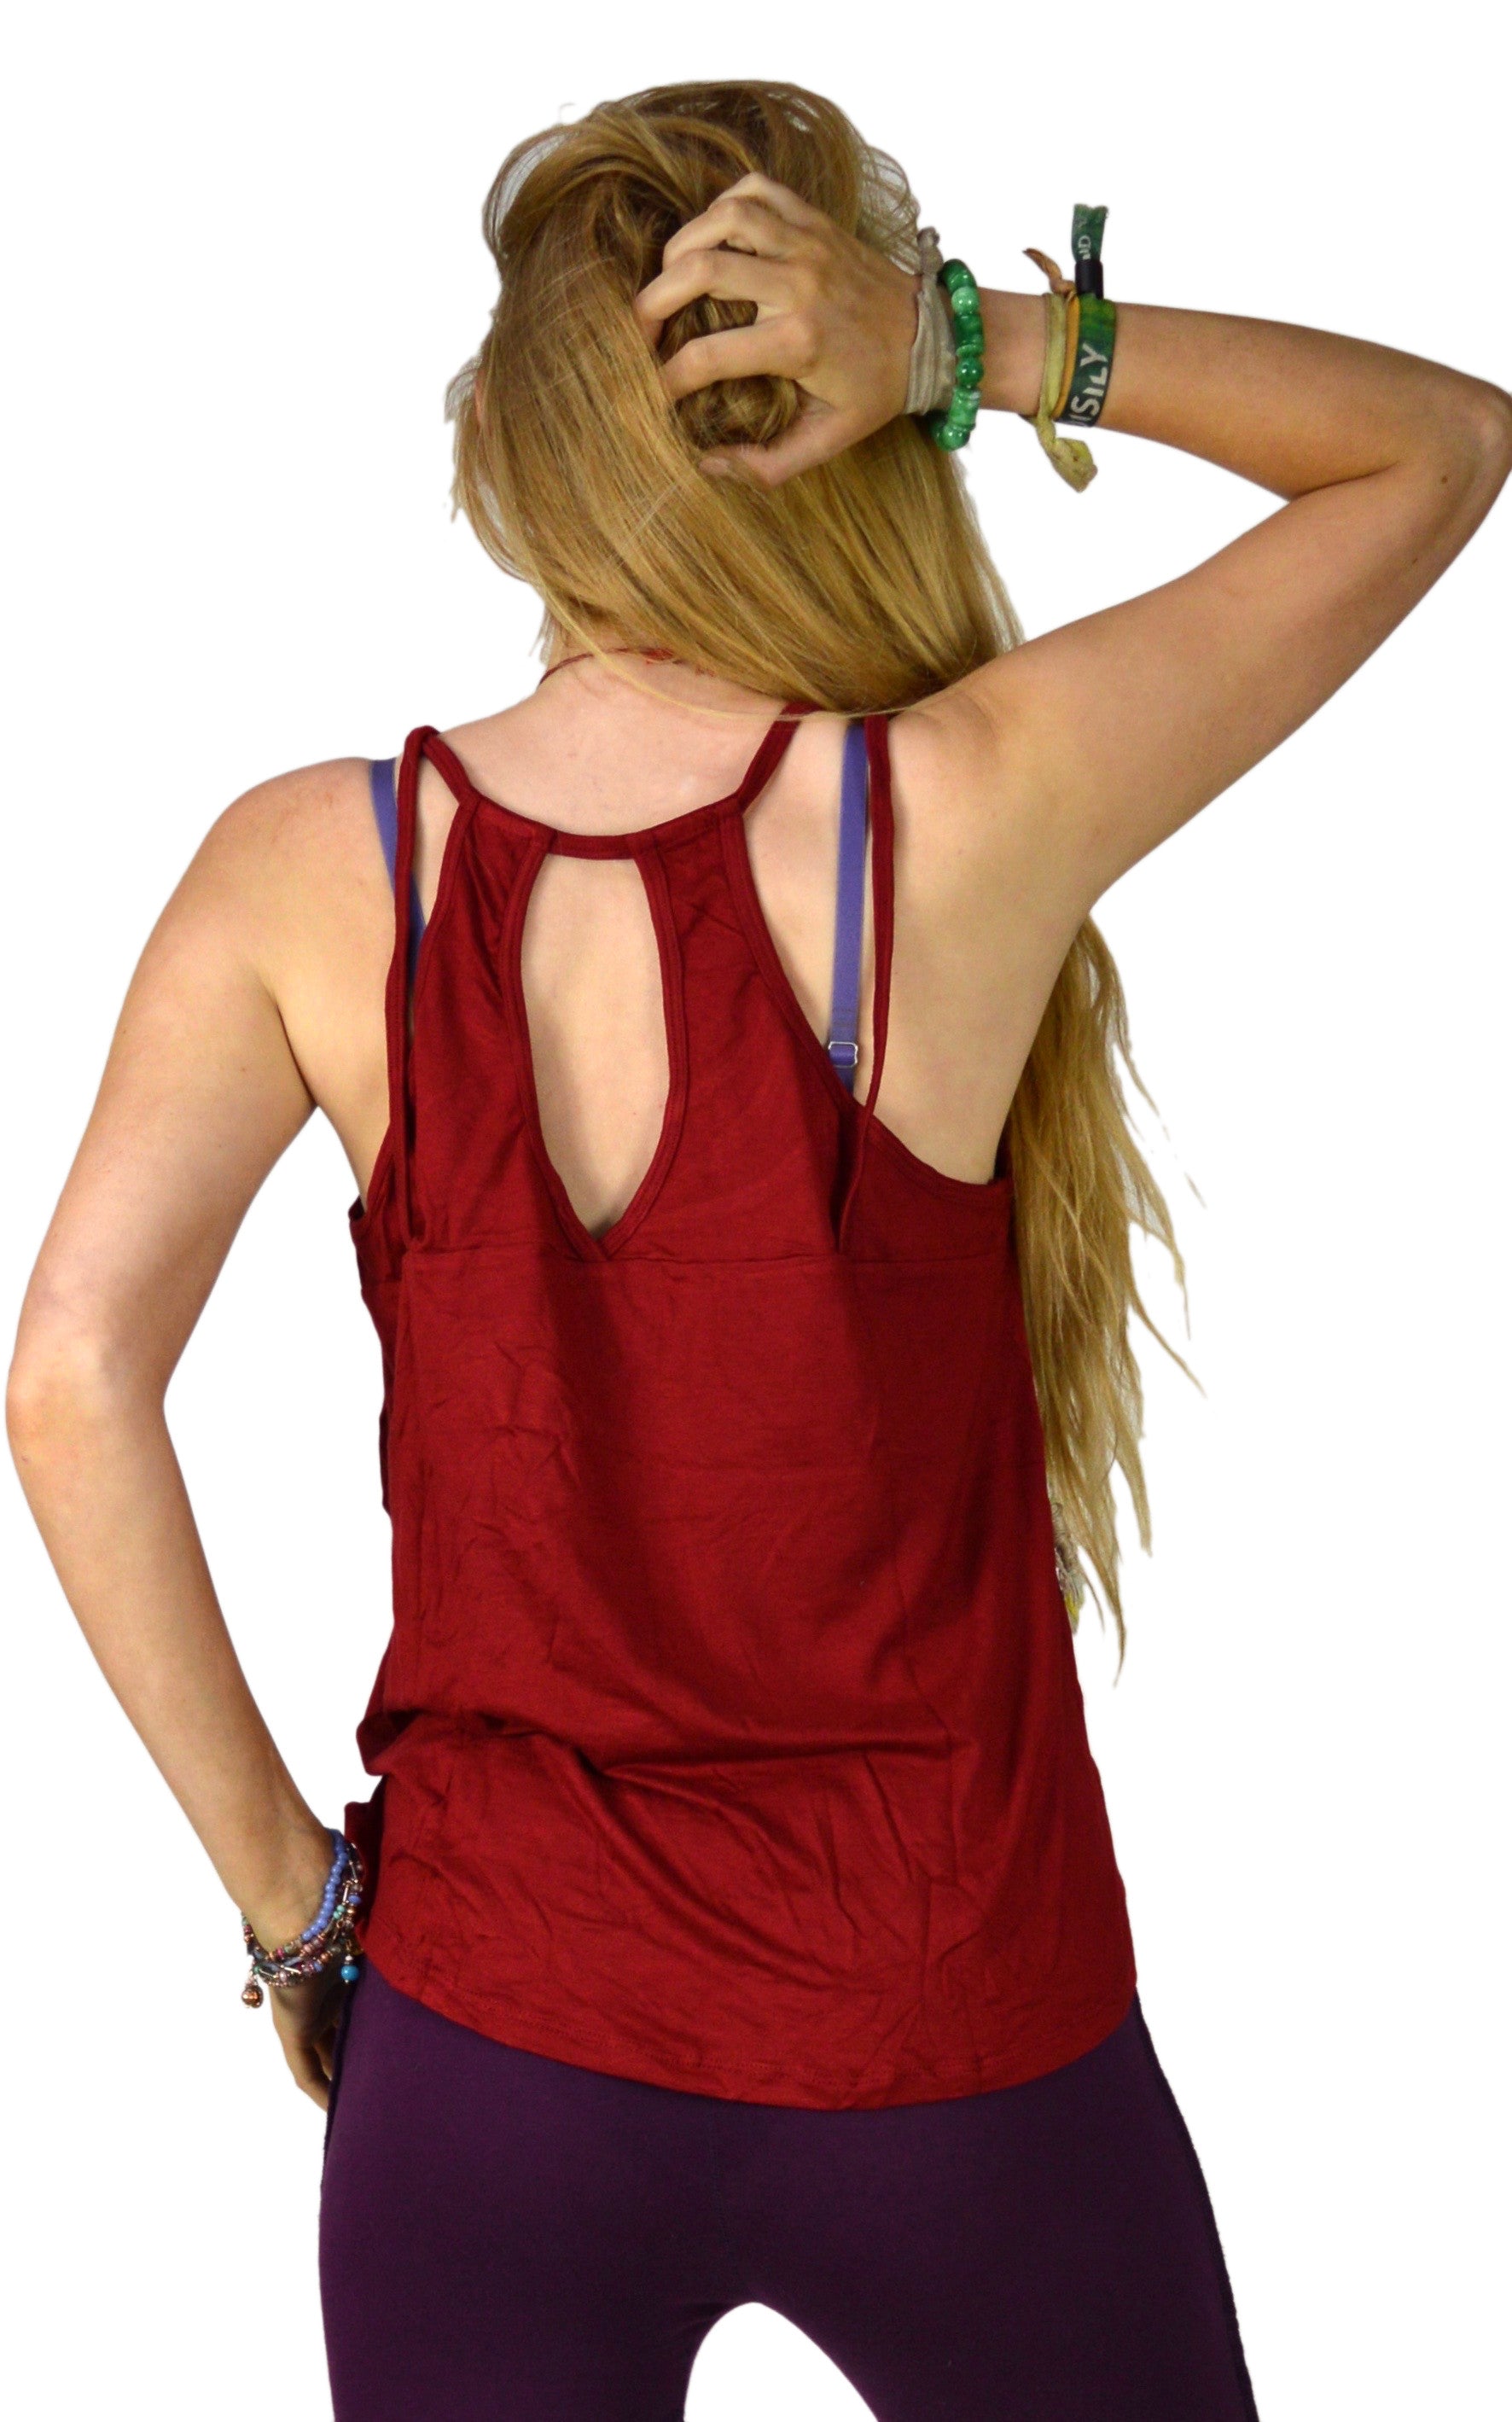 Buy Keneye Sando Vests for women, Women camisole, Active wear for women, Yoga top for women